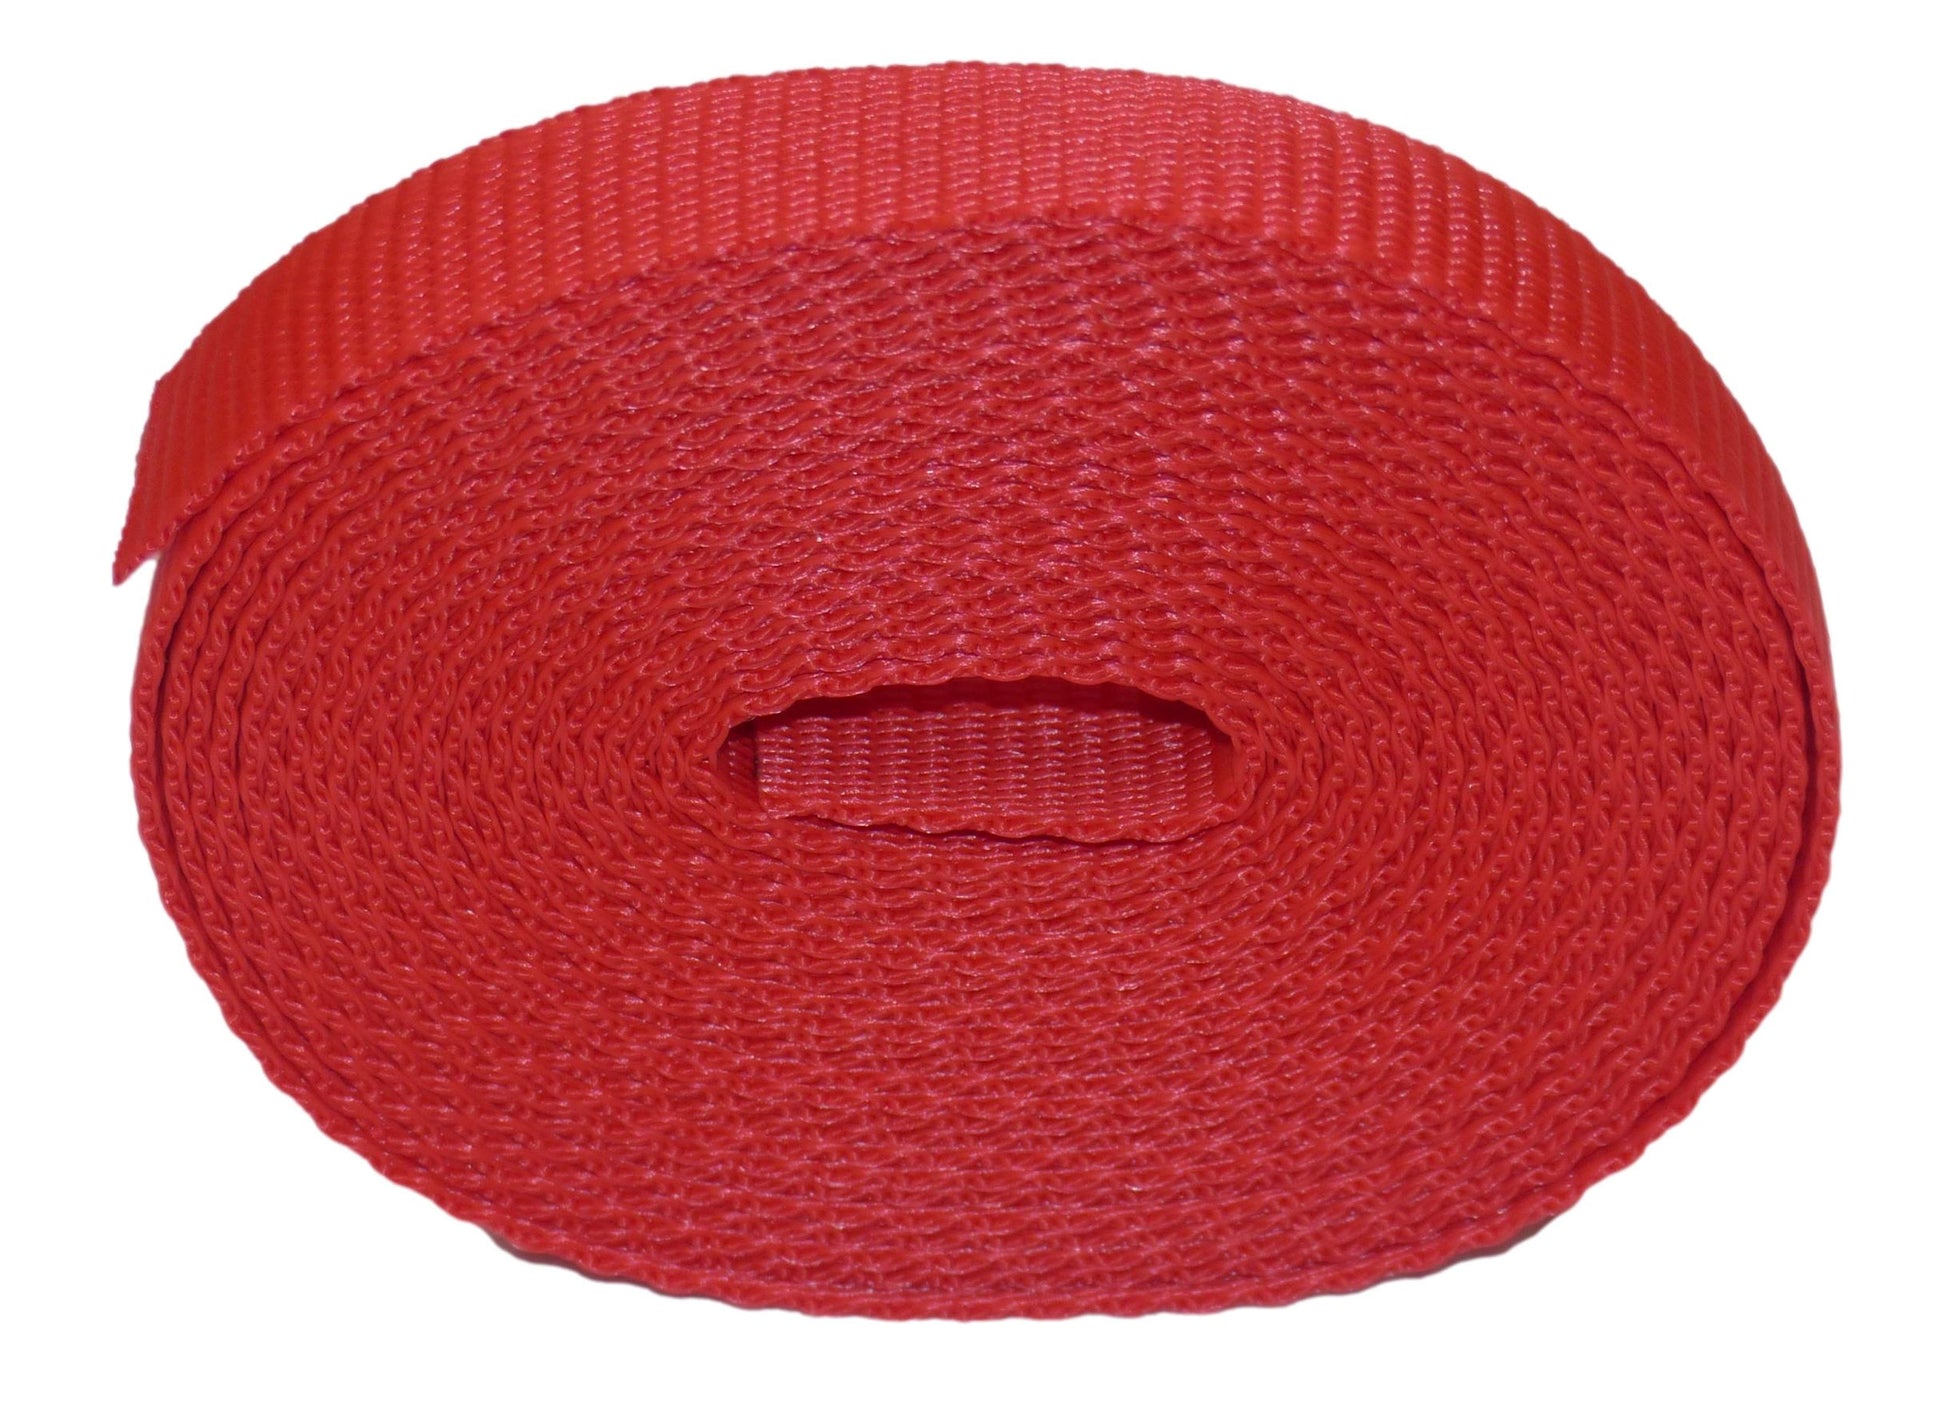 19mm polypropylene webbing in red